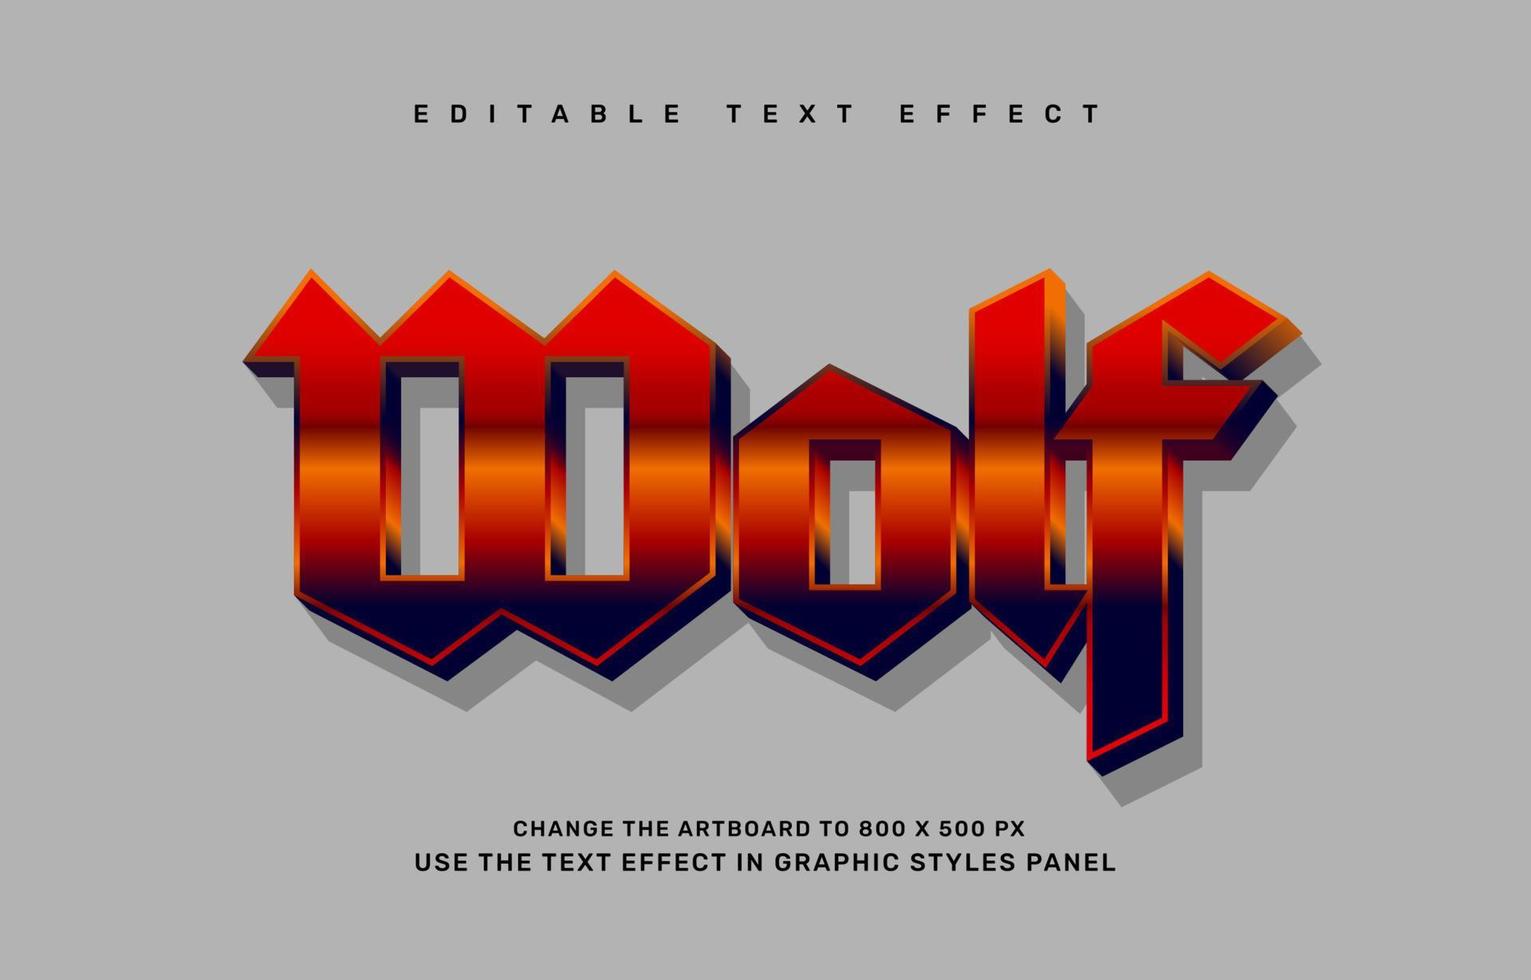 Elegant wolf editable text effect template vector